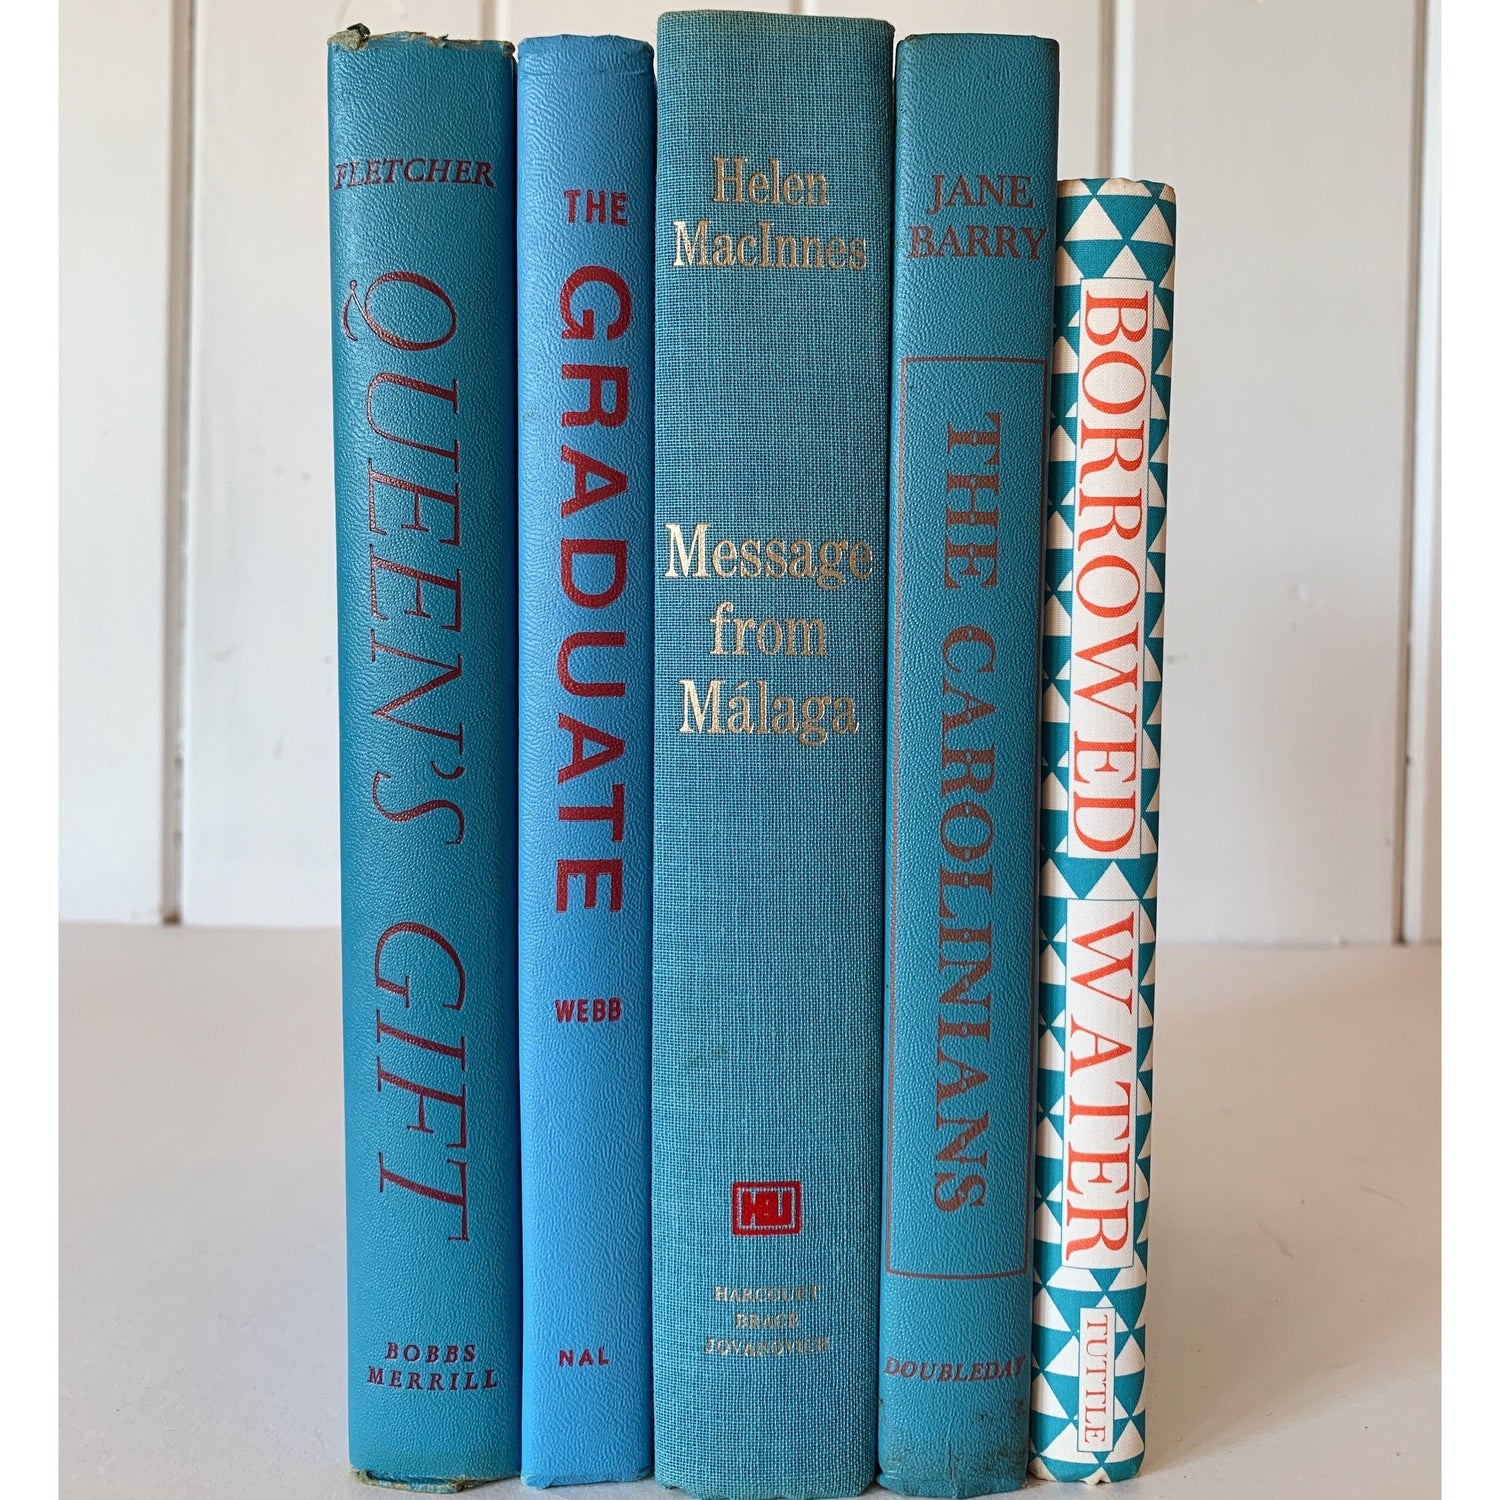 Vintage Mid-Century Turquoise Blue and Orange Books for Shelf Styling